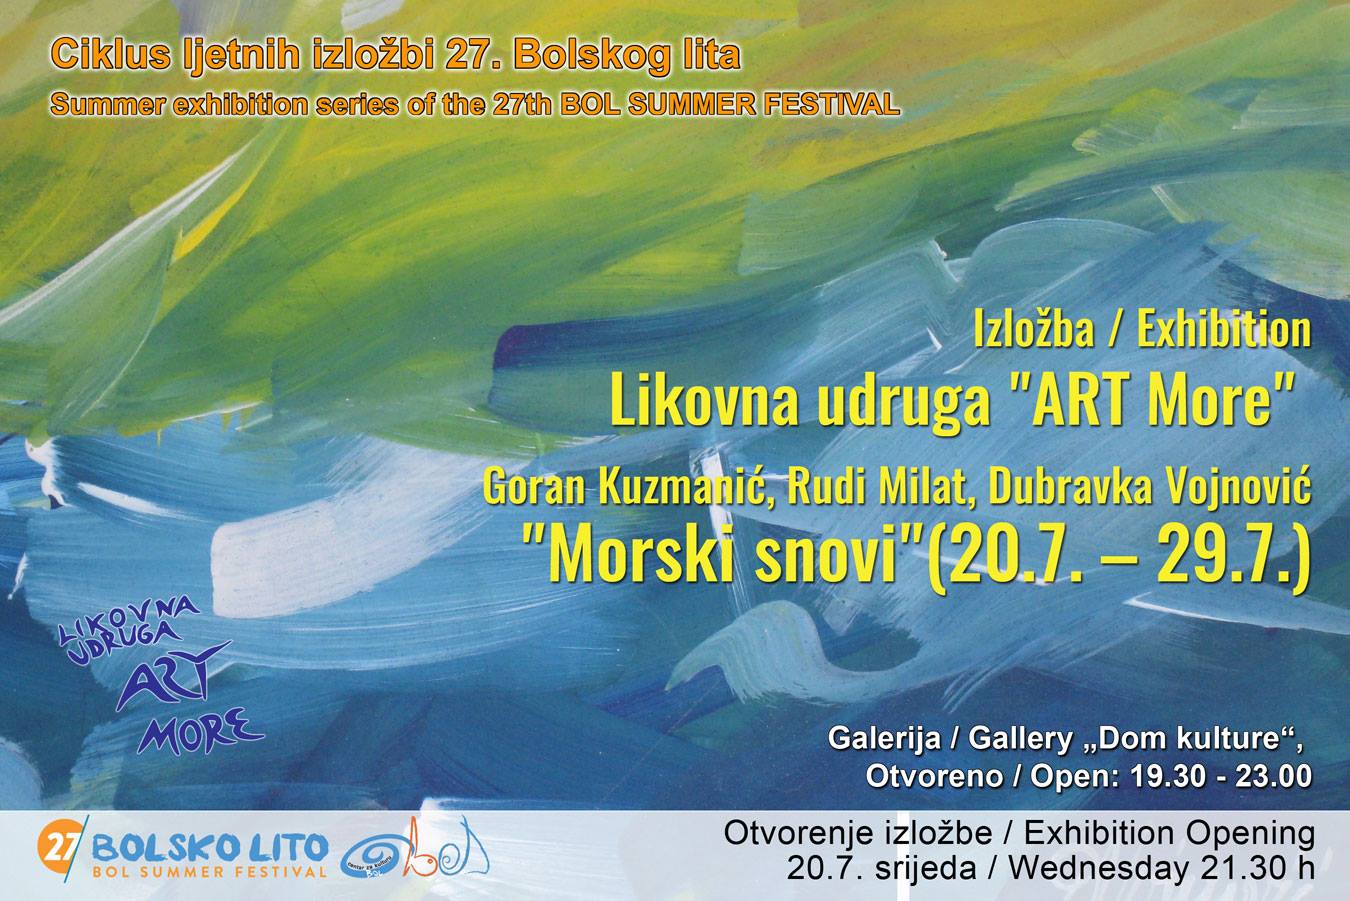 Exhibition Art More